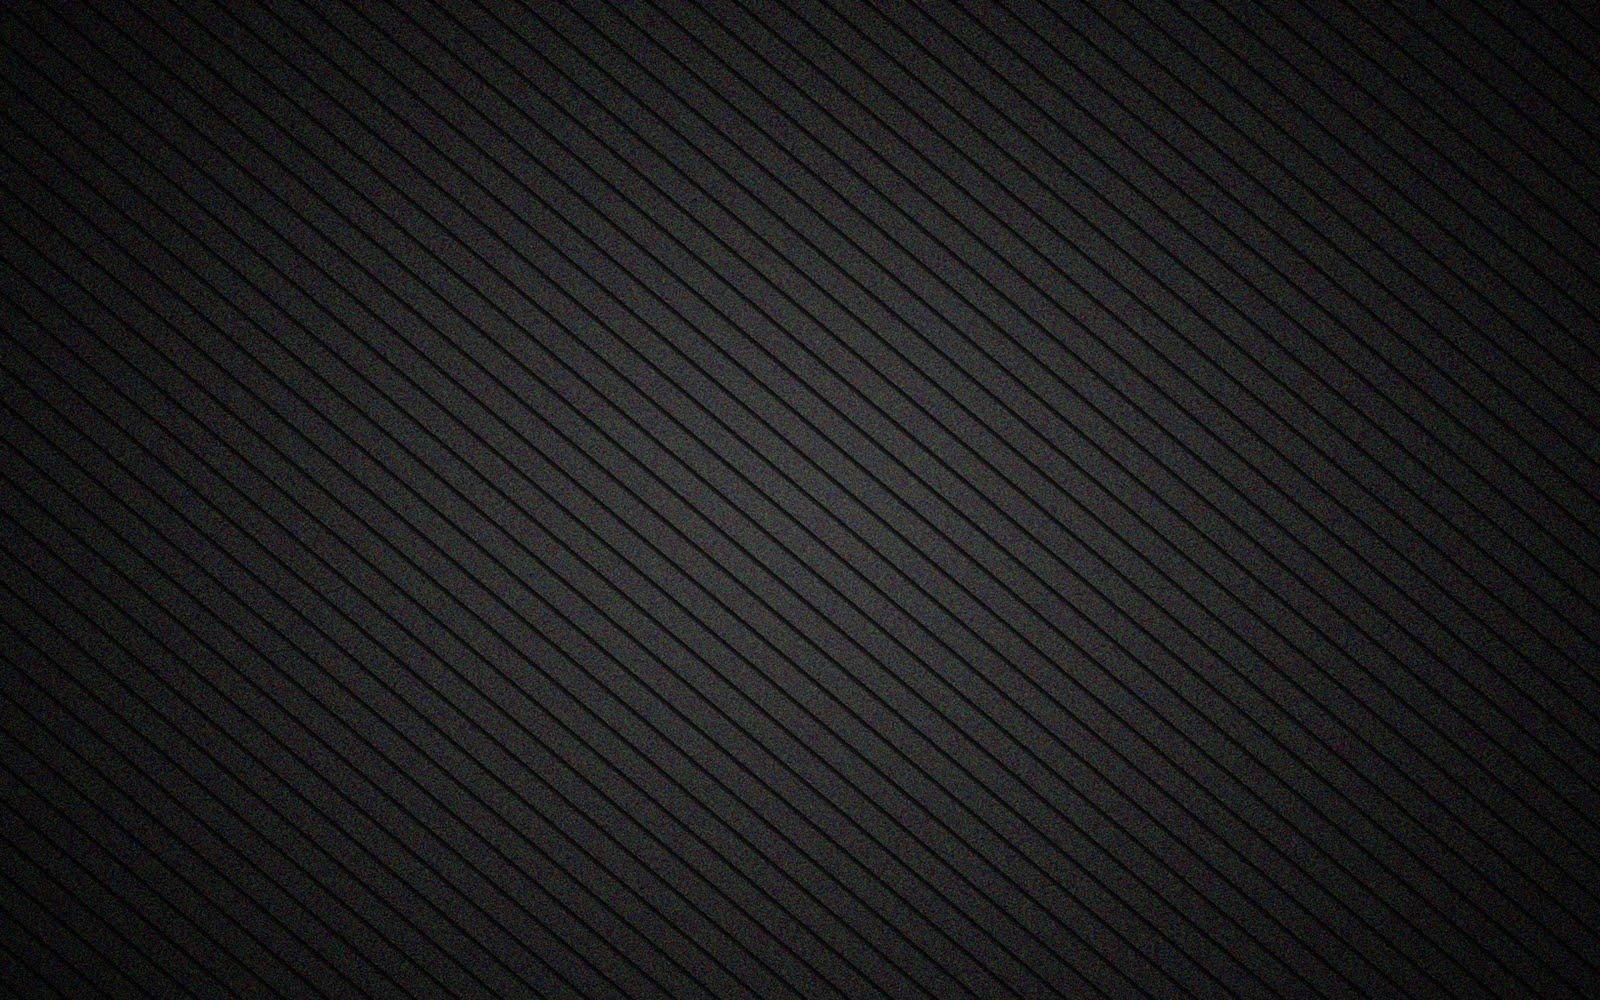 3D Black Wallpaper HD. Best Image Background